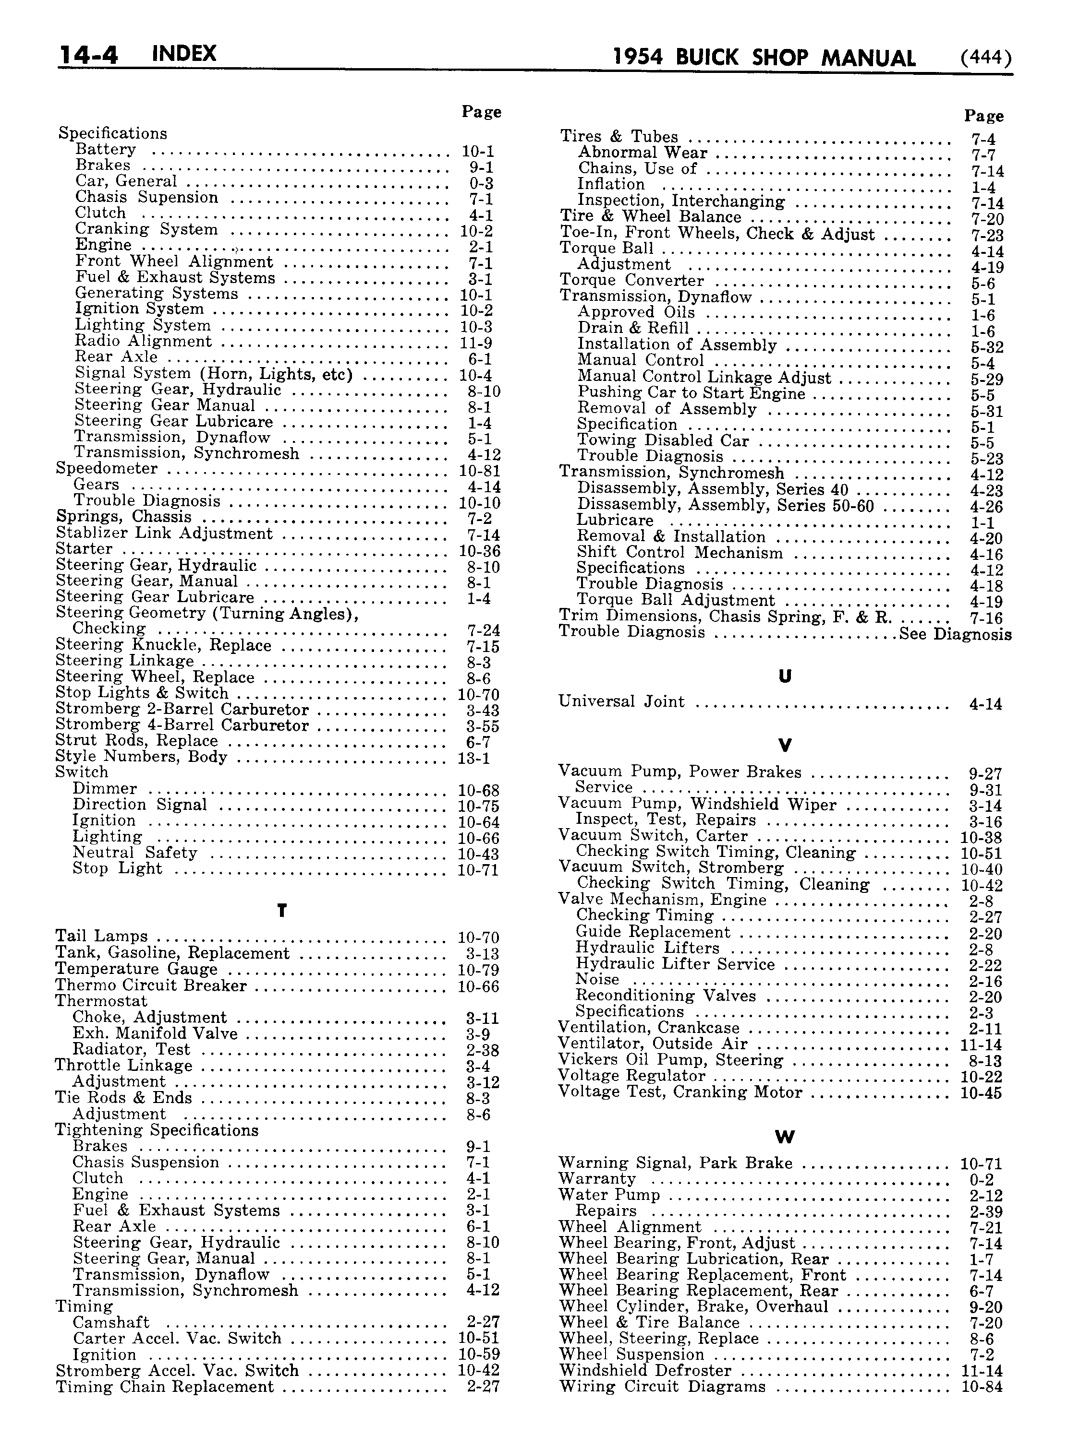 n_15 1954 Buick Shop Manual - Index-004-004.jpg